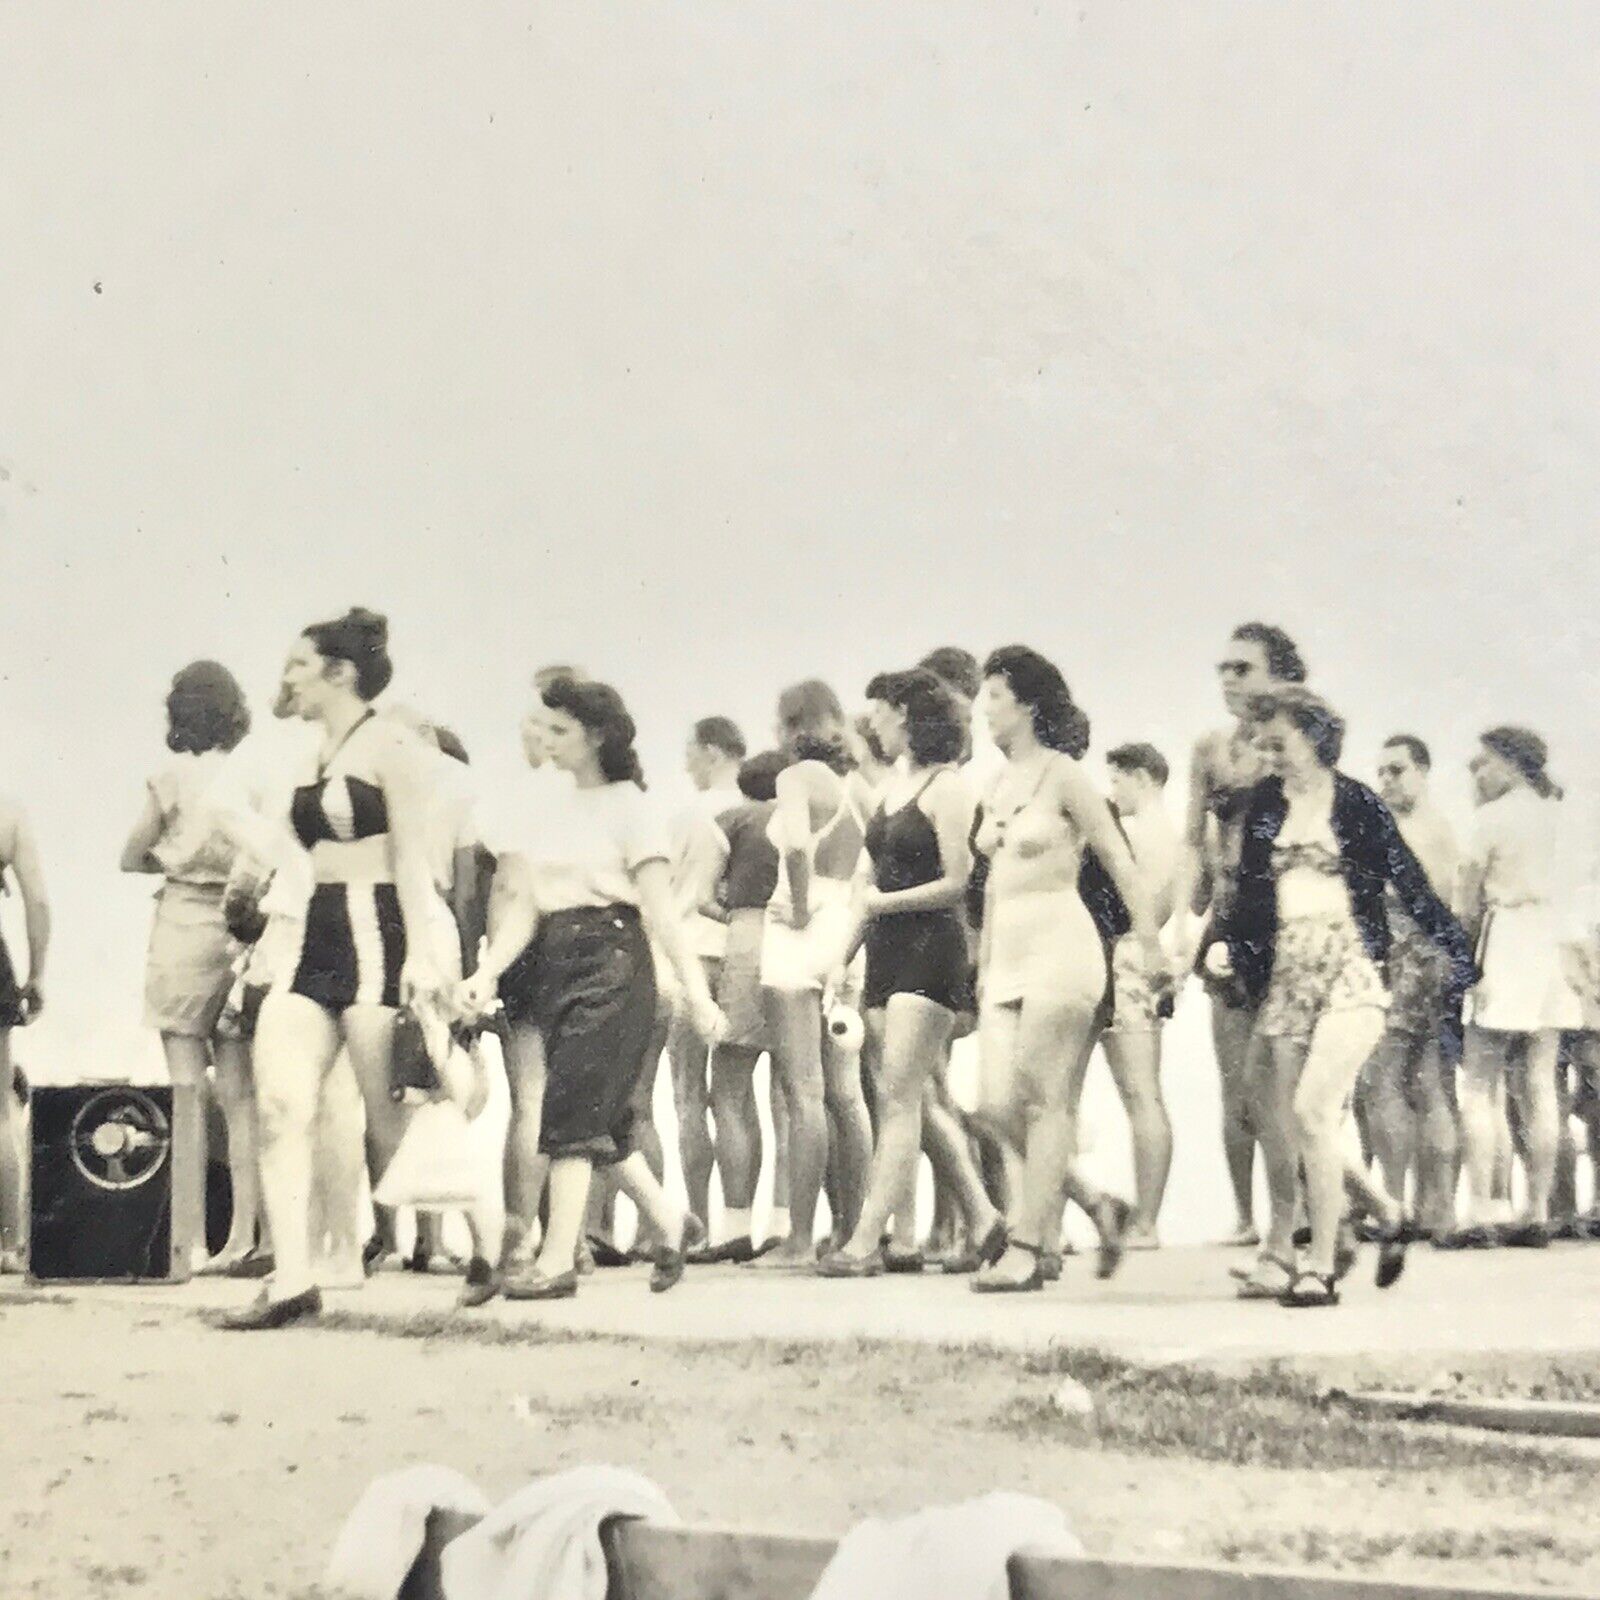 Old Original Photo BW Vintage Photograph Crowded Beach Scene 1945